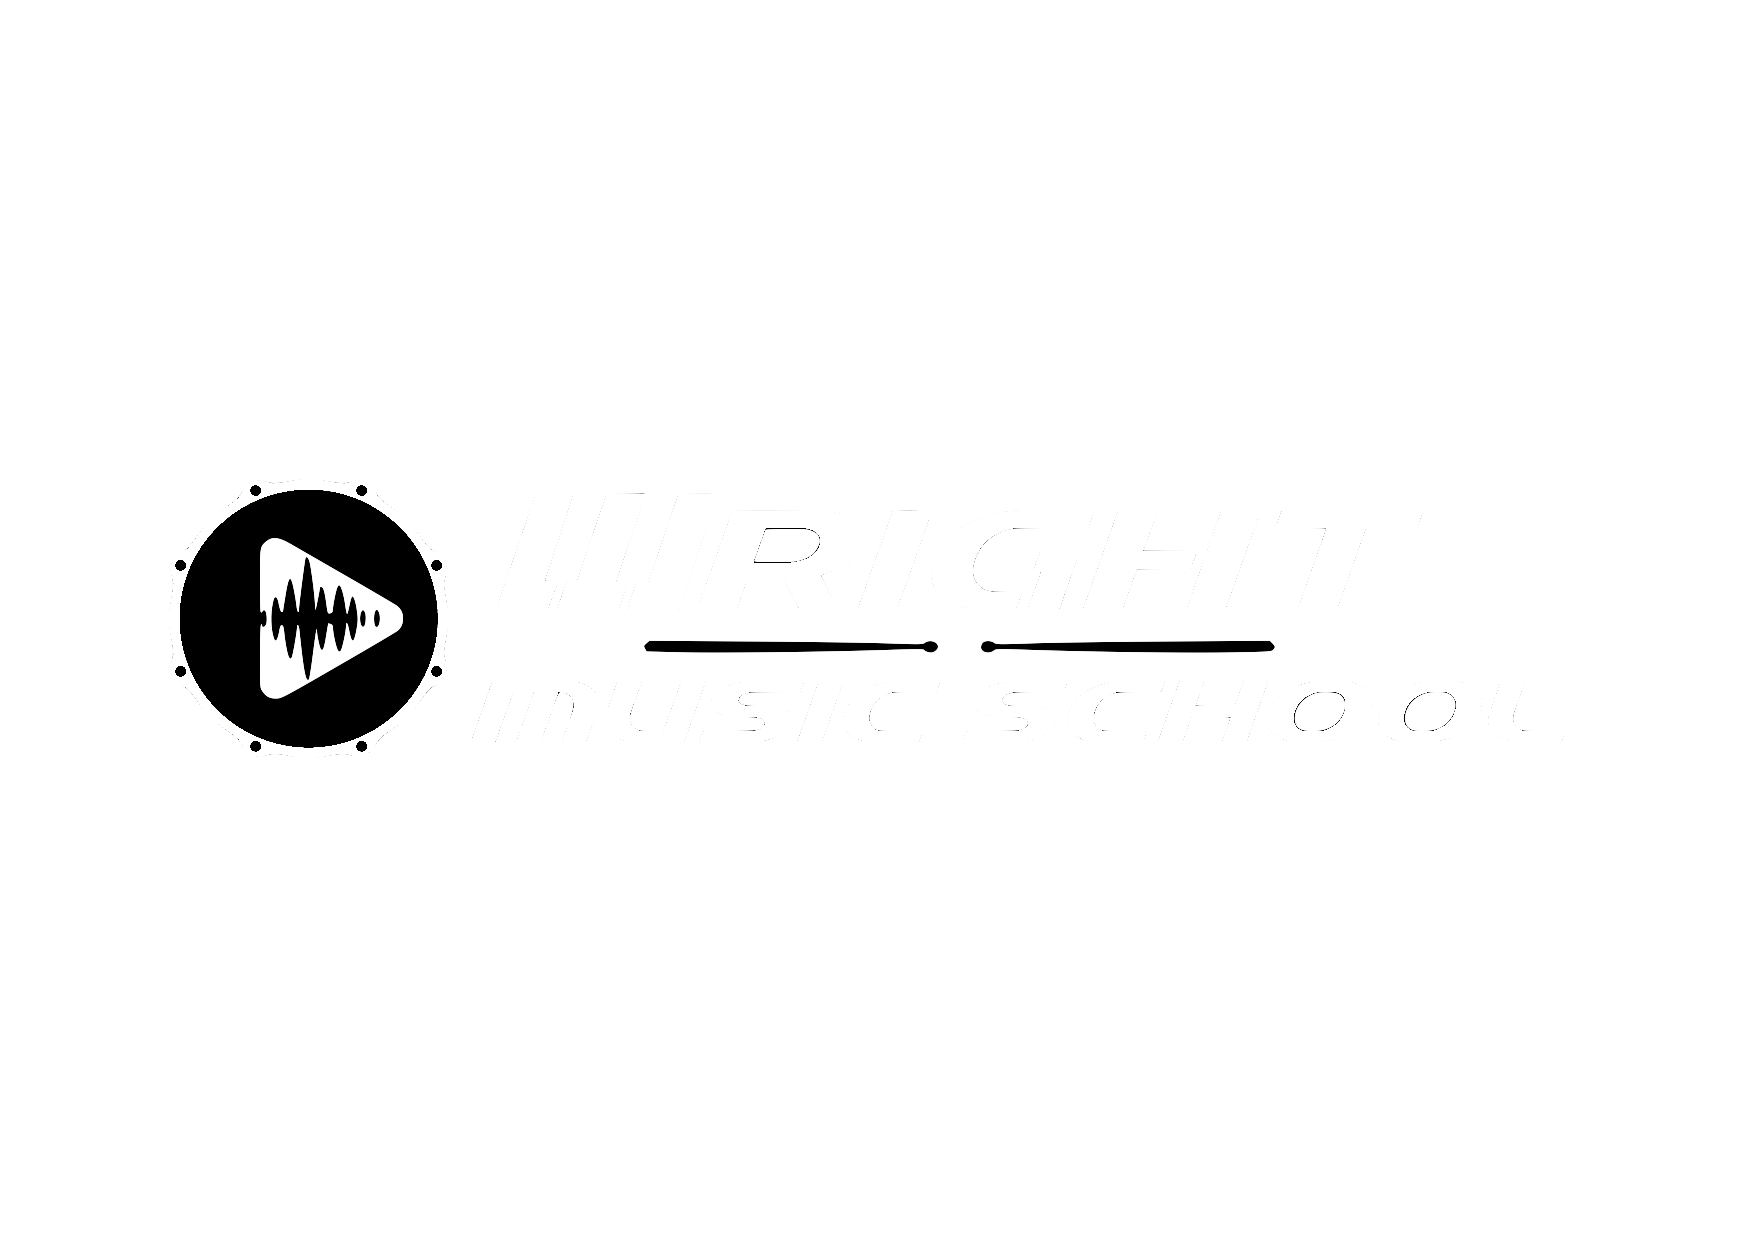 Wright Music School